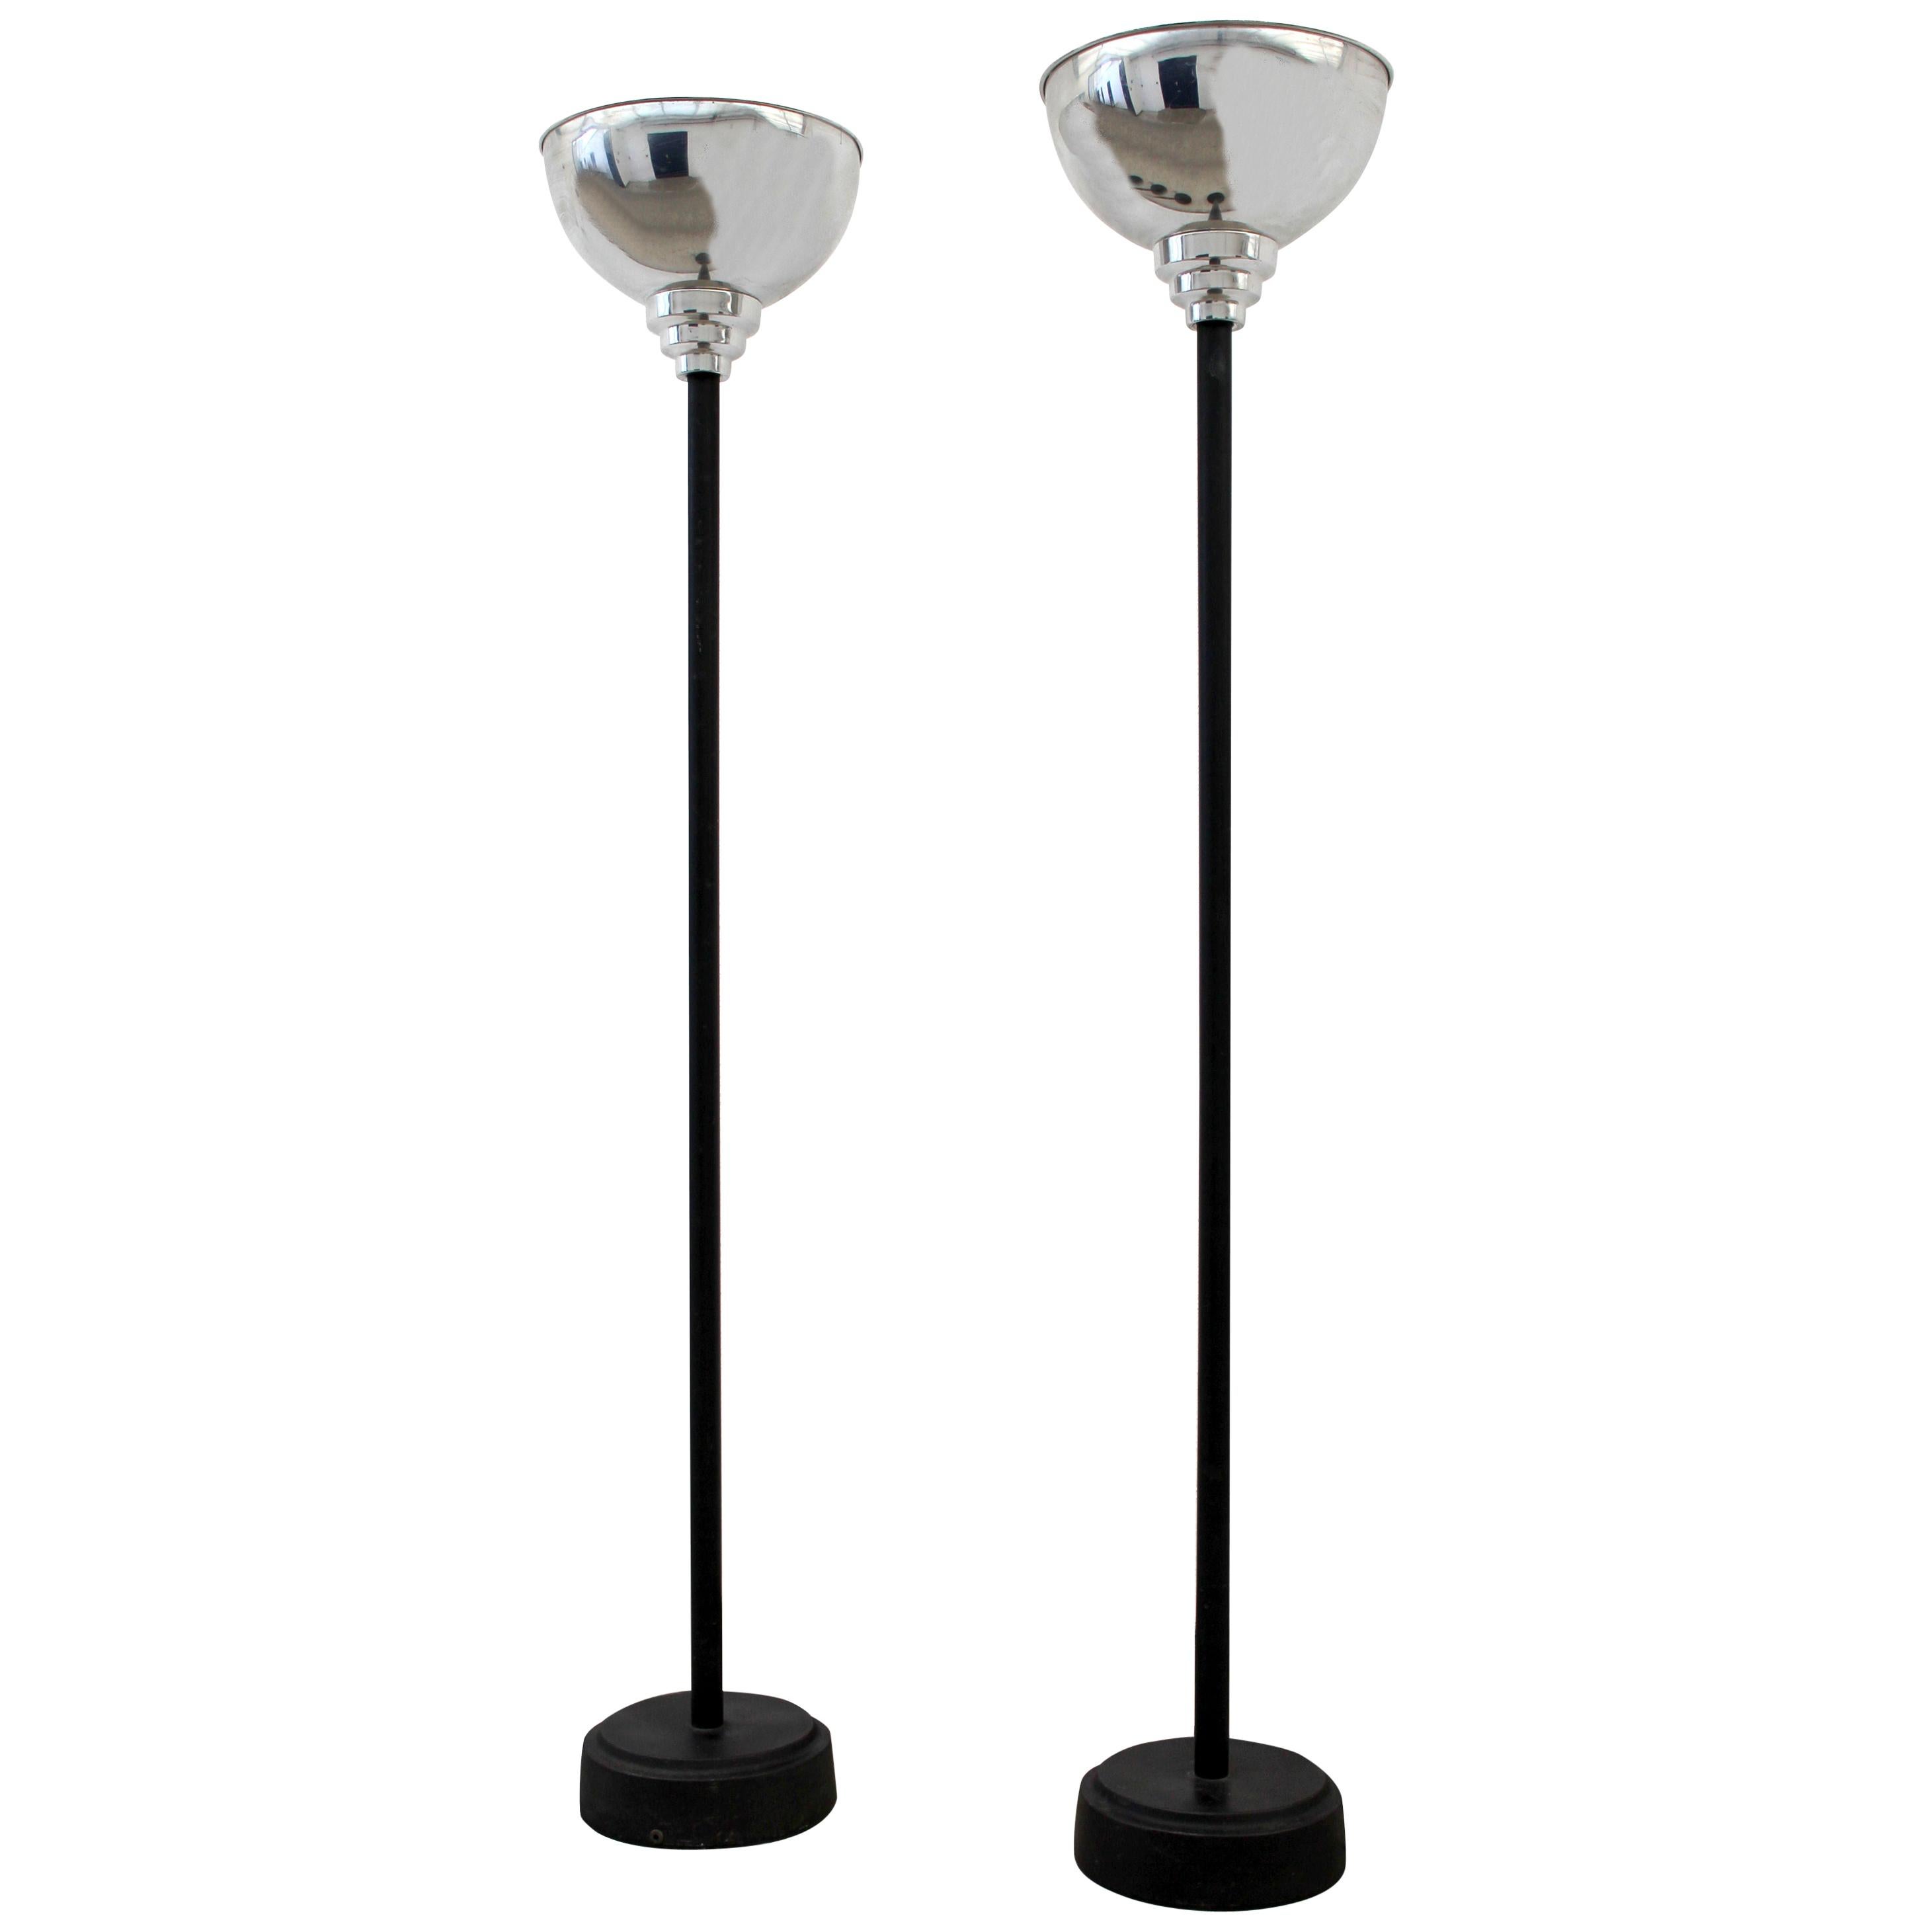 Art Deco Modernist Pair of Floor Lamp Uplighters, c1930 For Sale